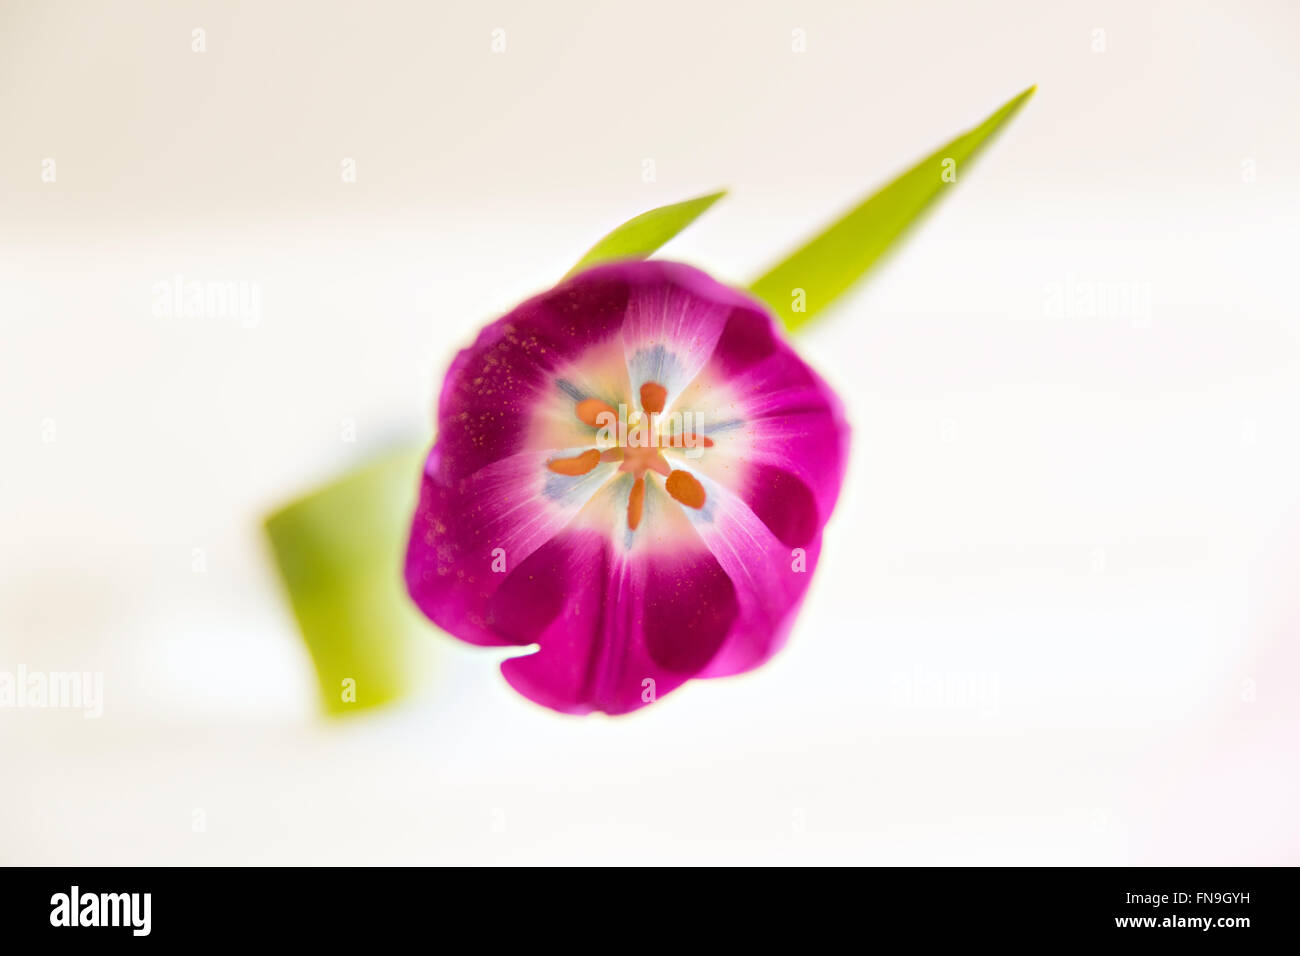 image of single tulip, top view Stock Photo